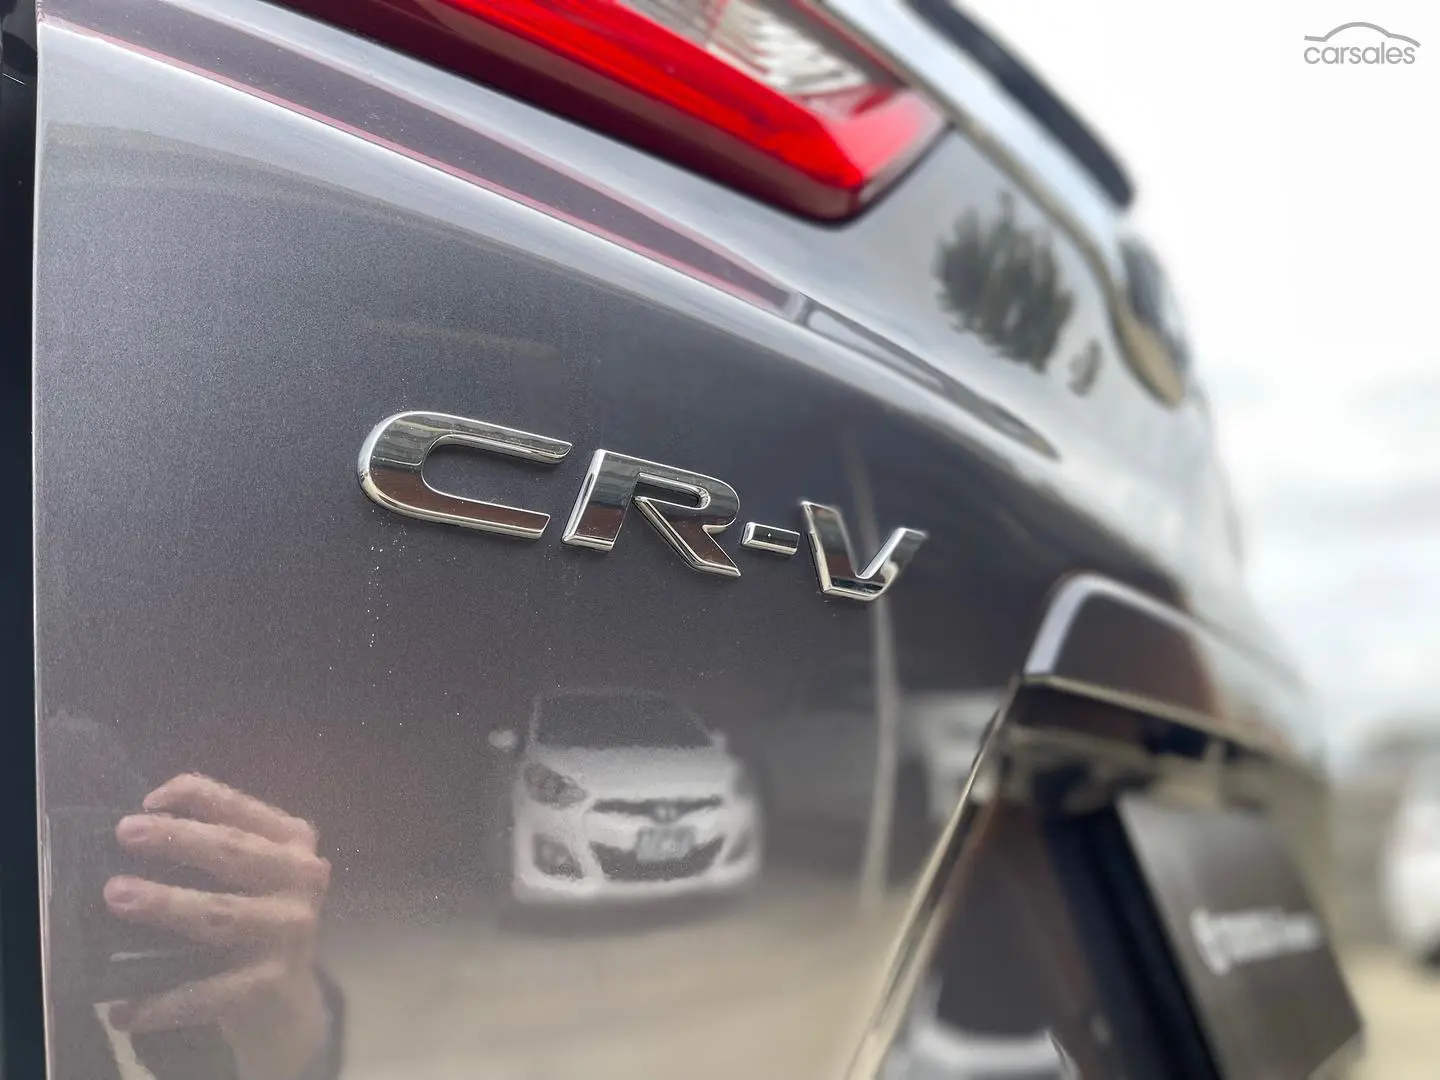 2018 Honda CR-V Image 29